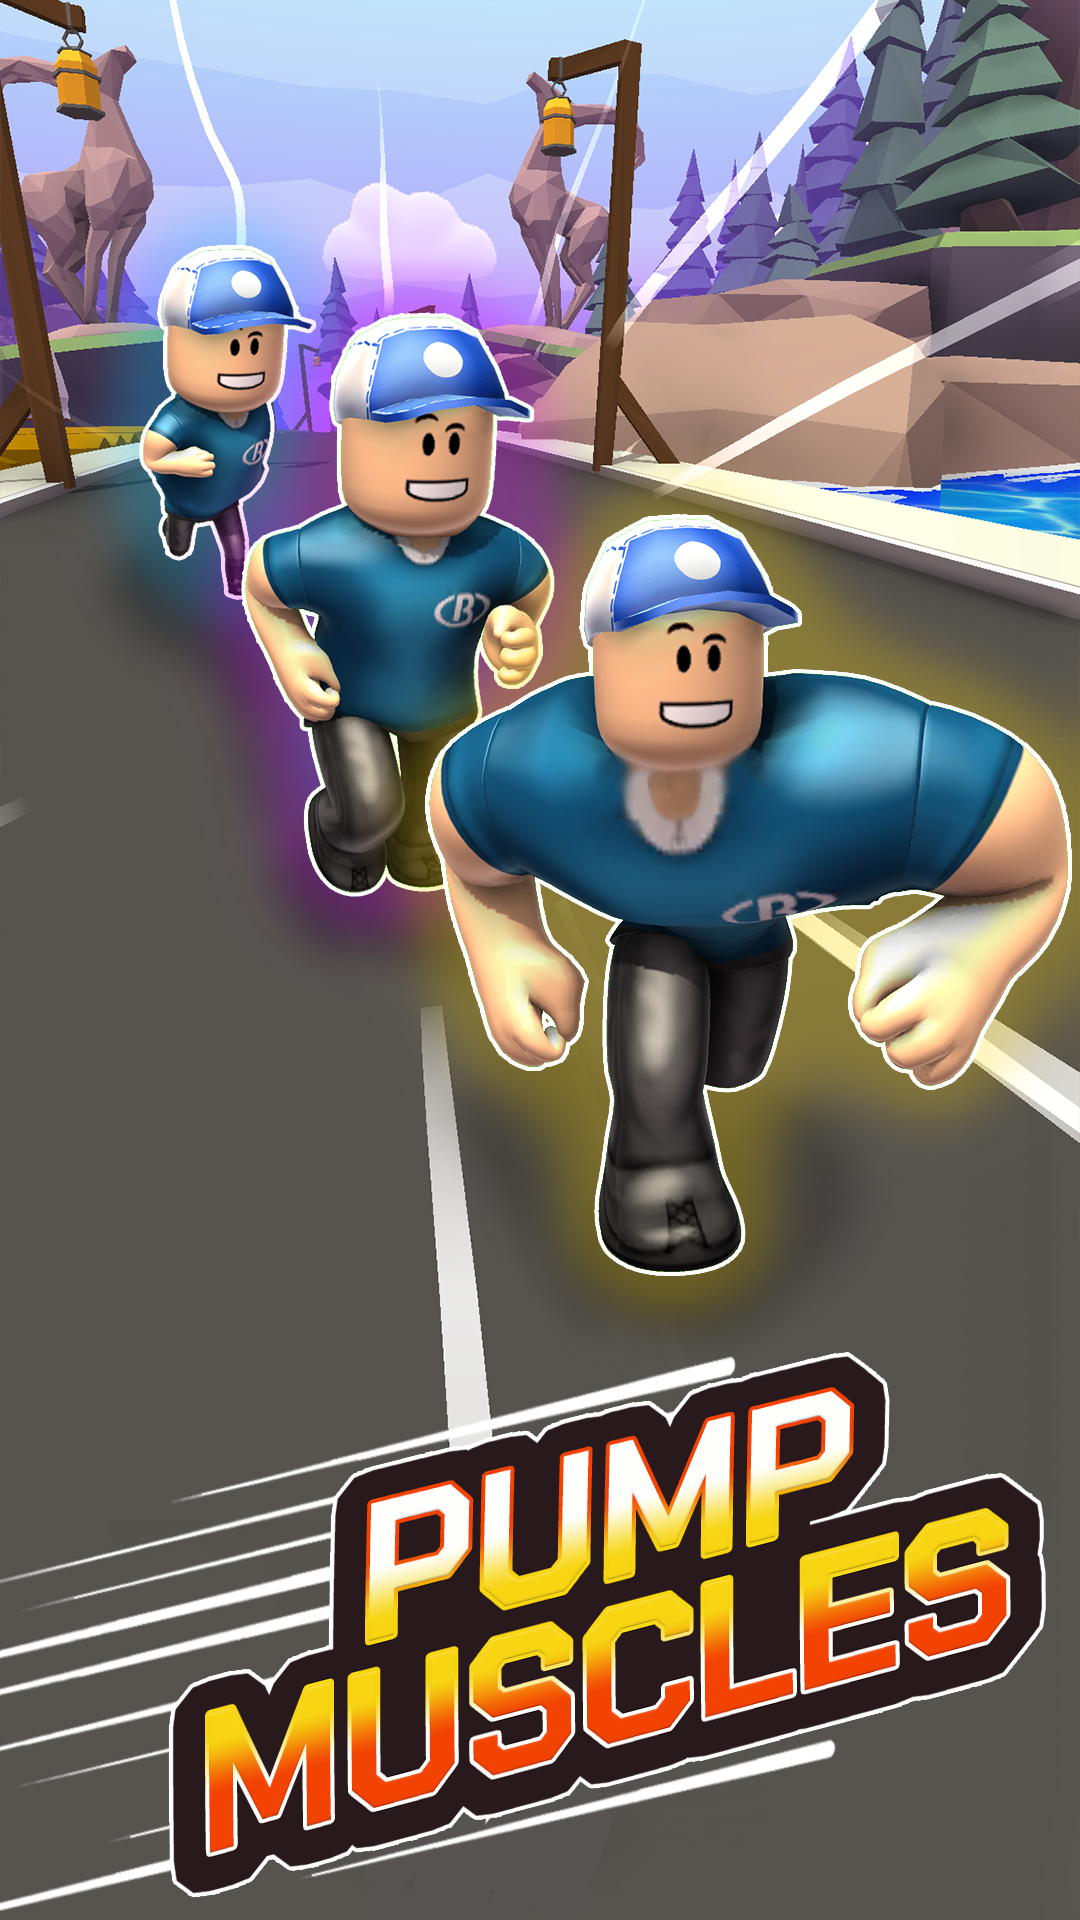 Race Clicker: Tap Tap Game遊戲截圖